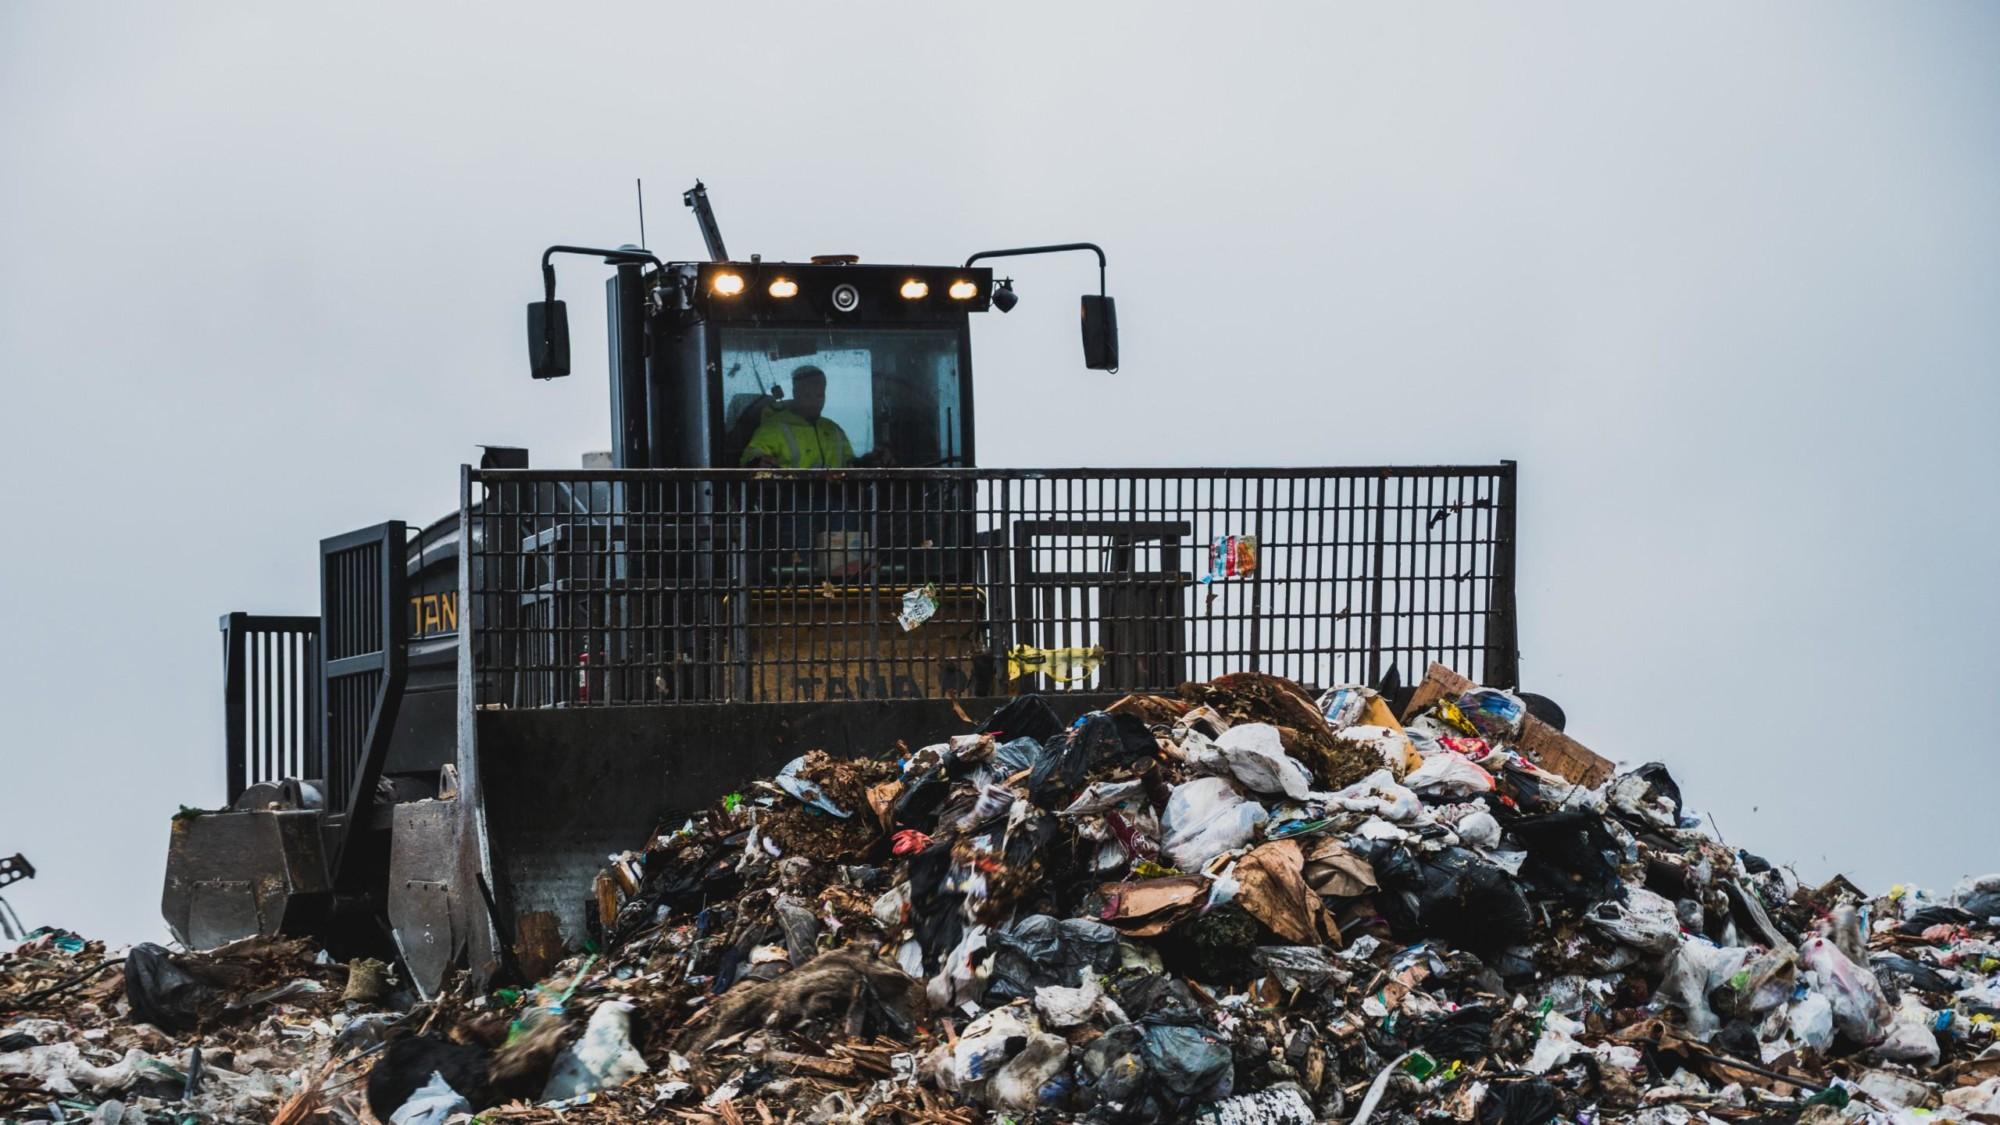 TANA E520 landfill compactor at Winnebago Landfill